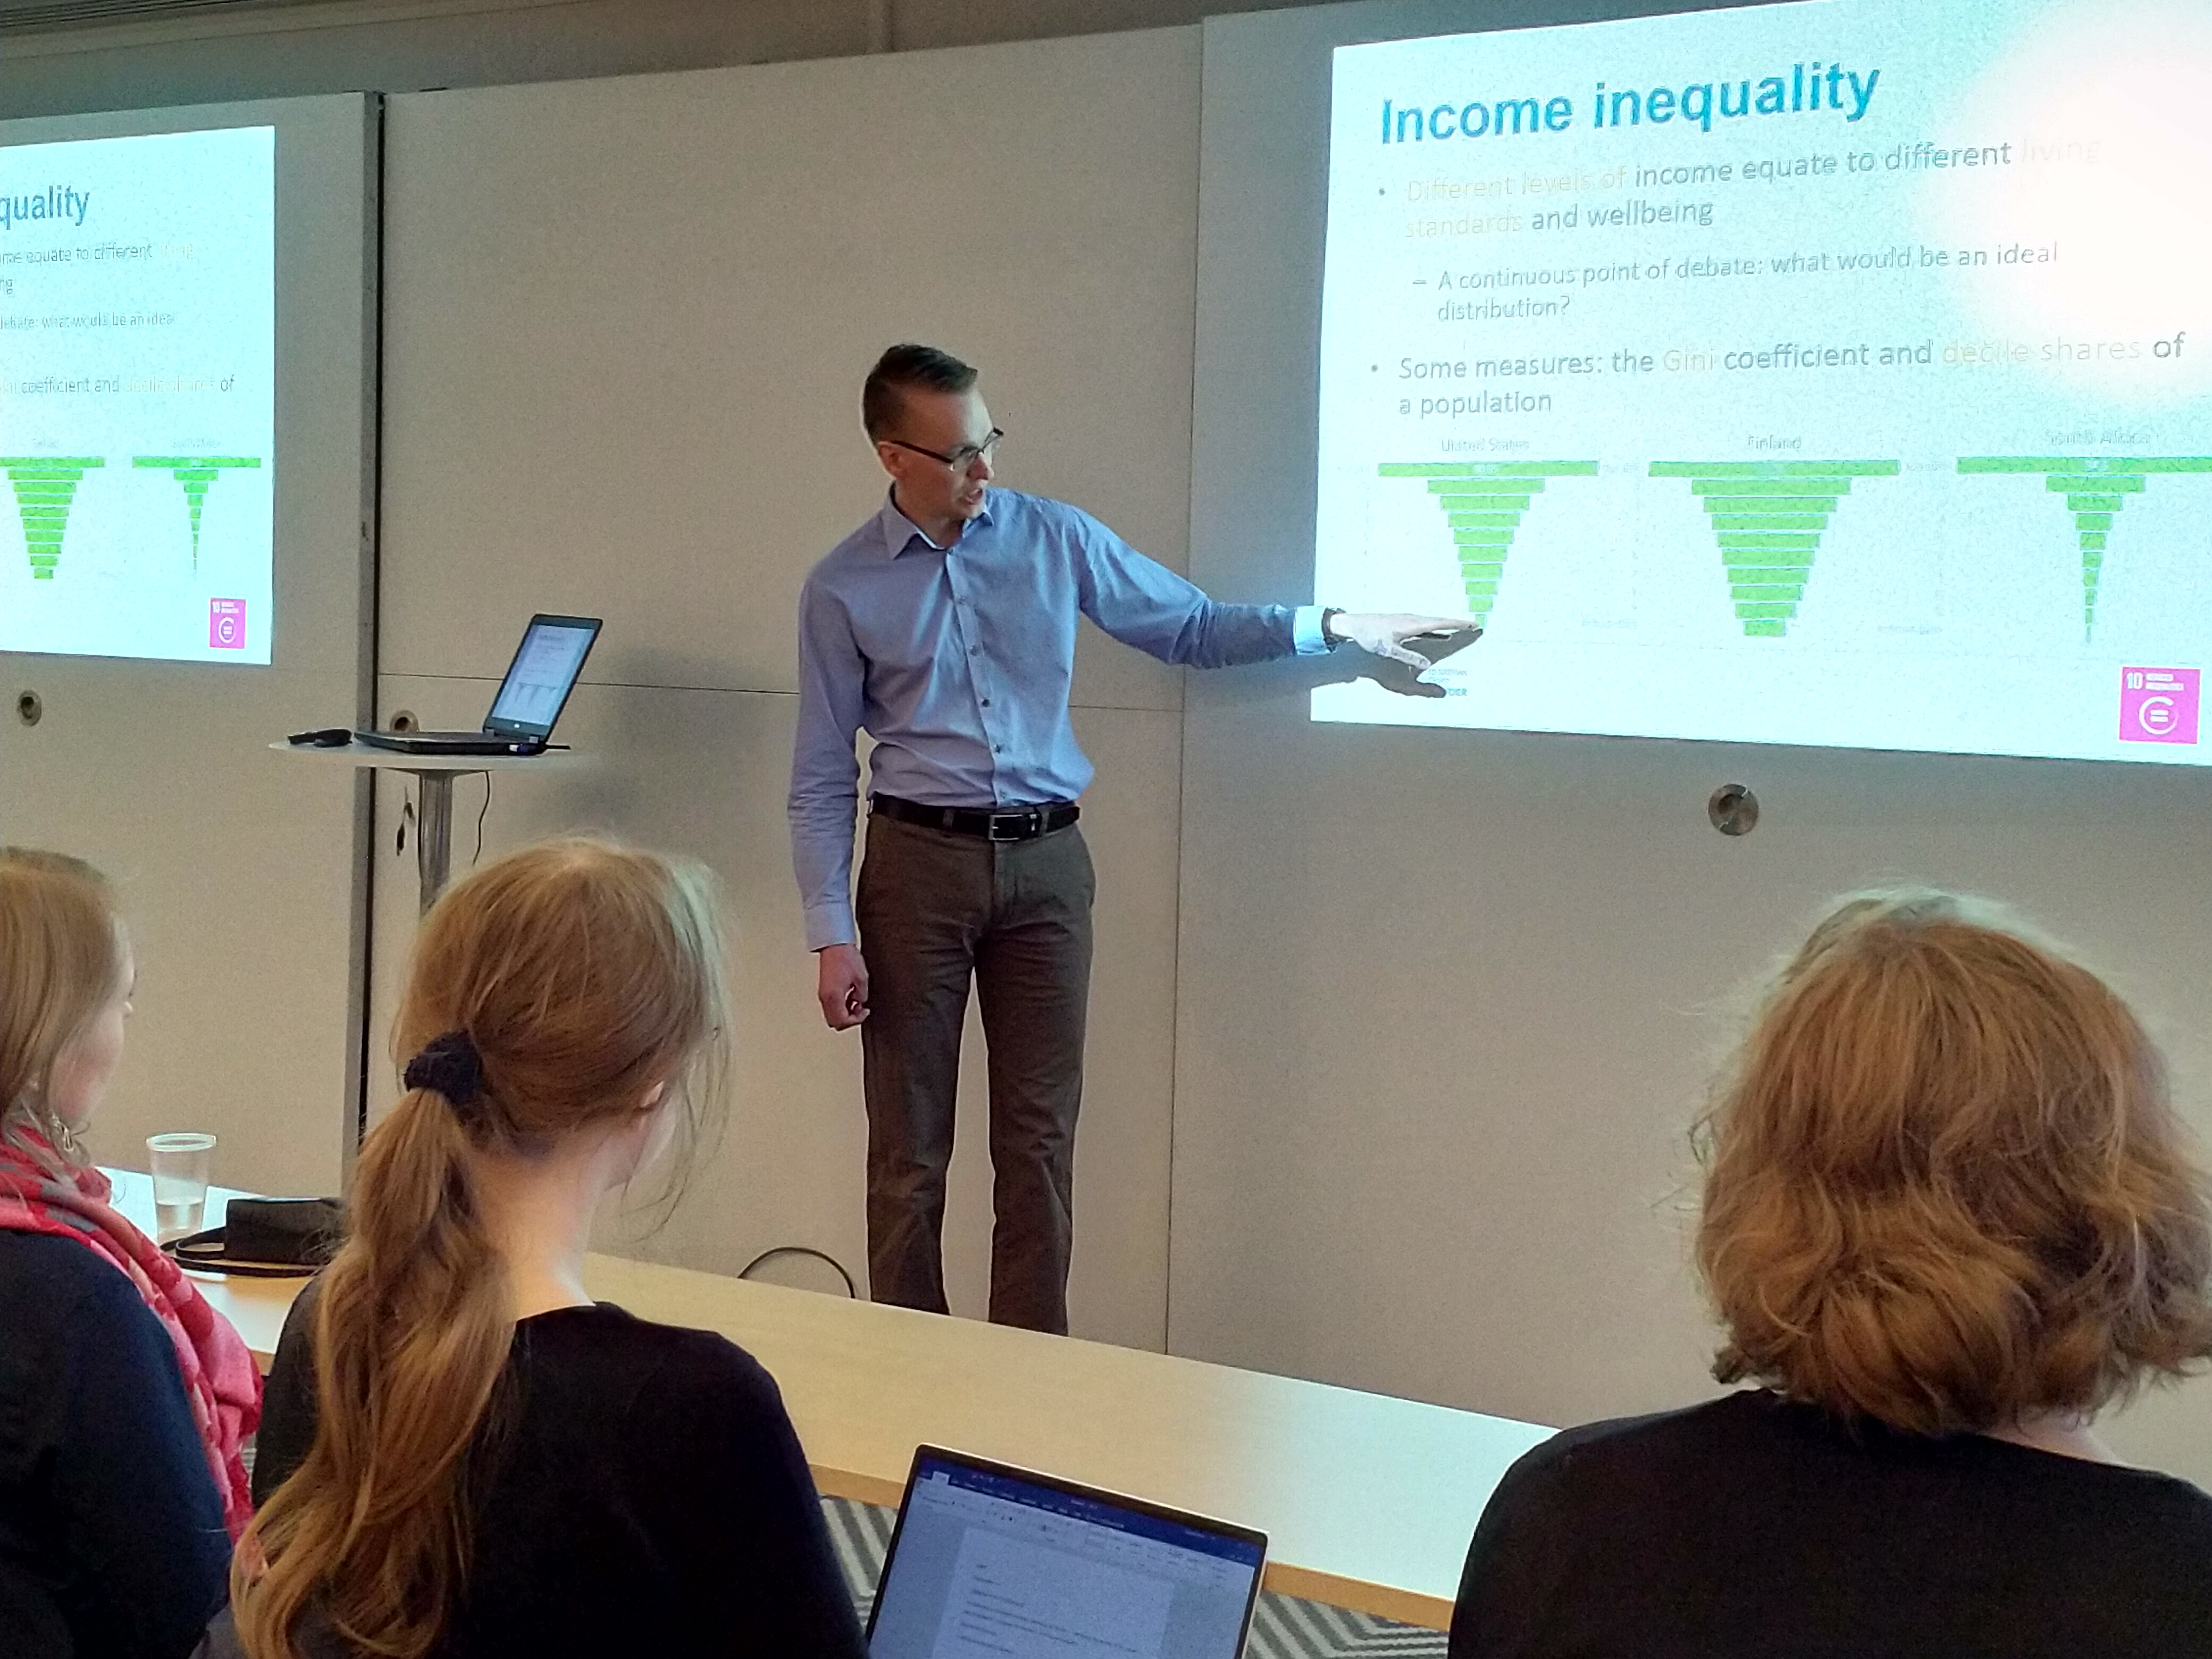 Antti presenting on Data for Development